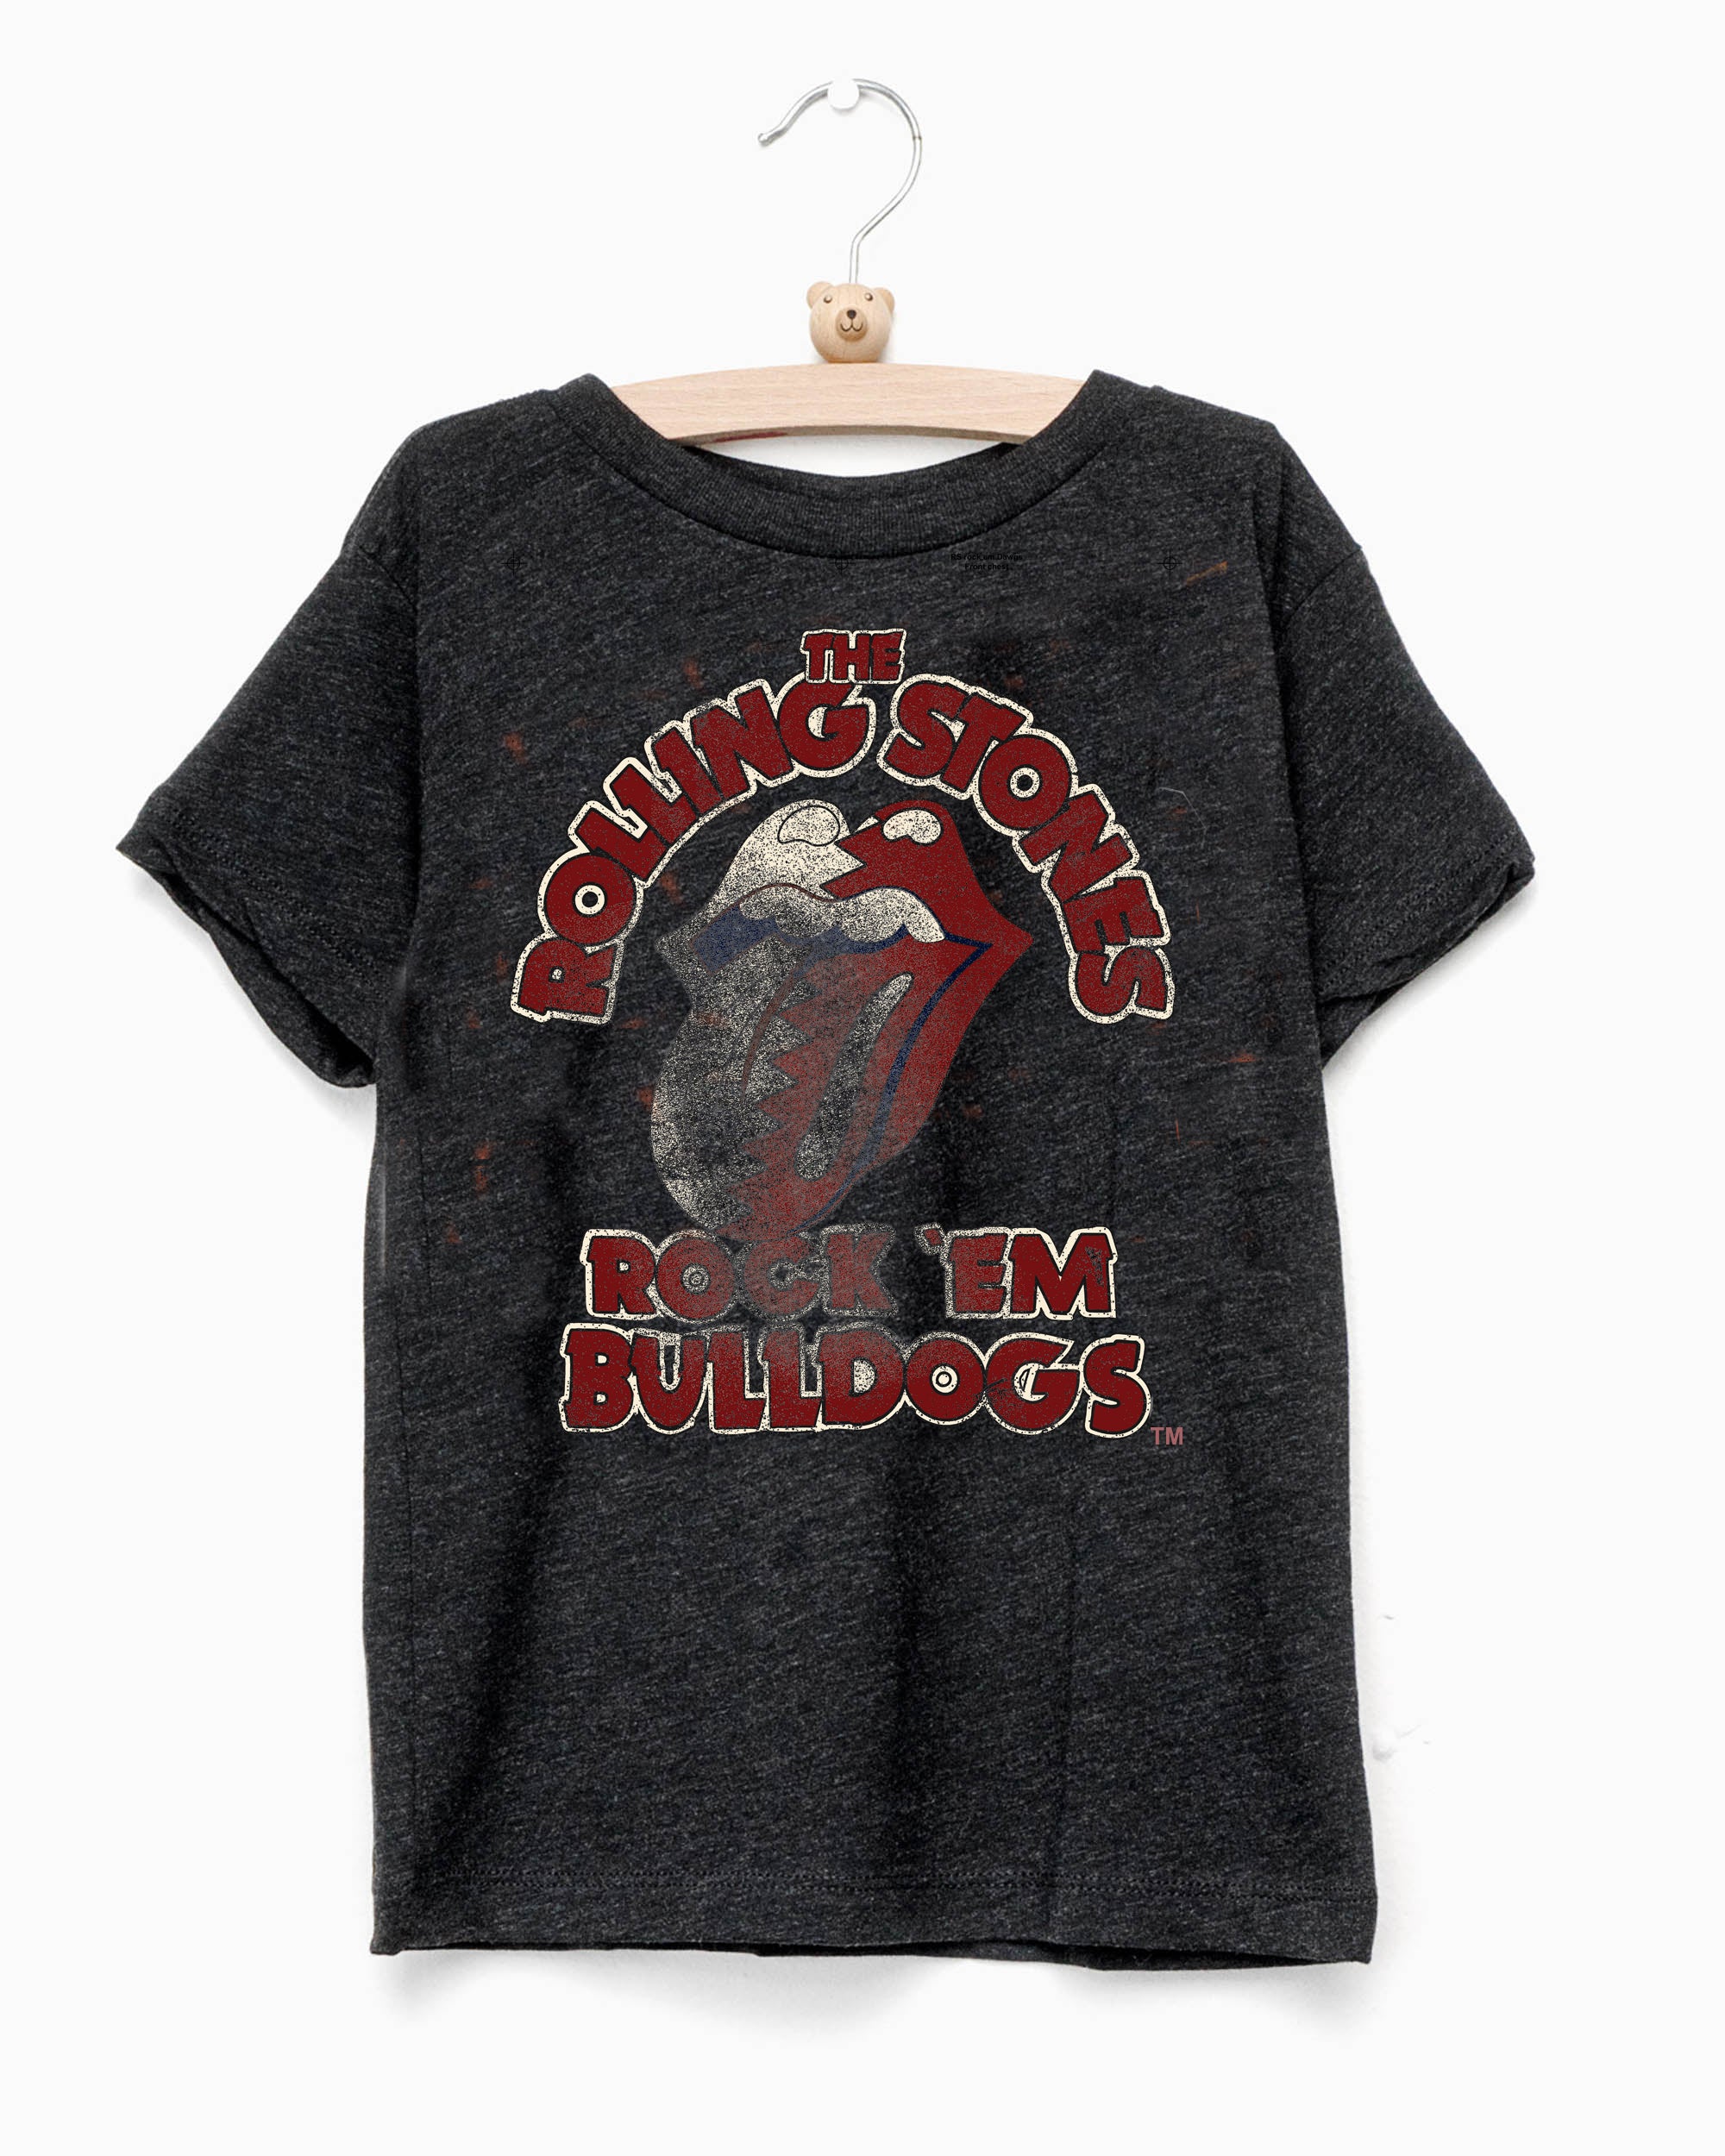 Children's Rolling Stones Rock 'Em MSU Bulldogs Charcoal Tee - shoplivylu